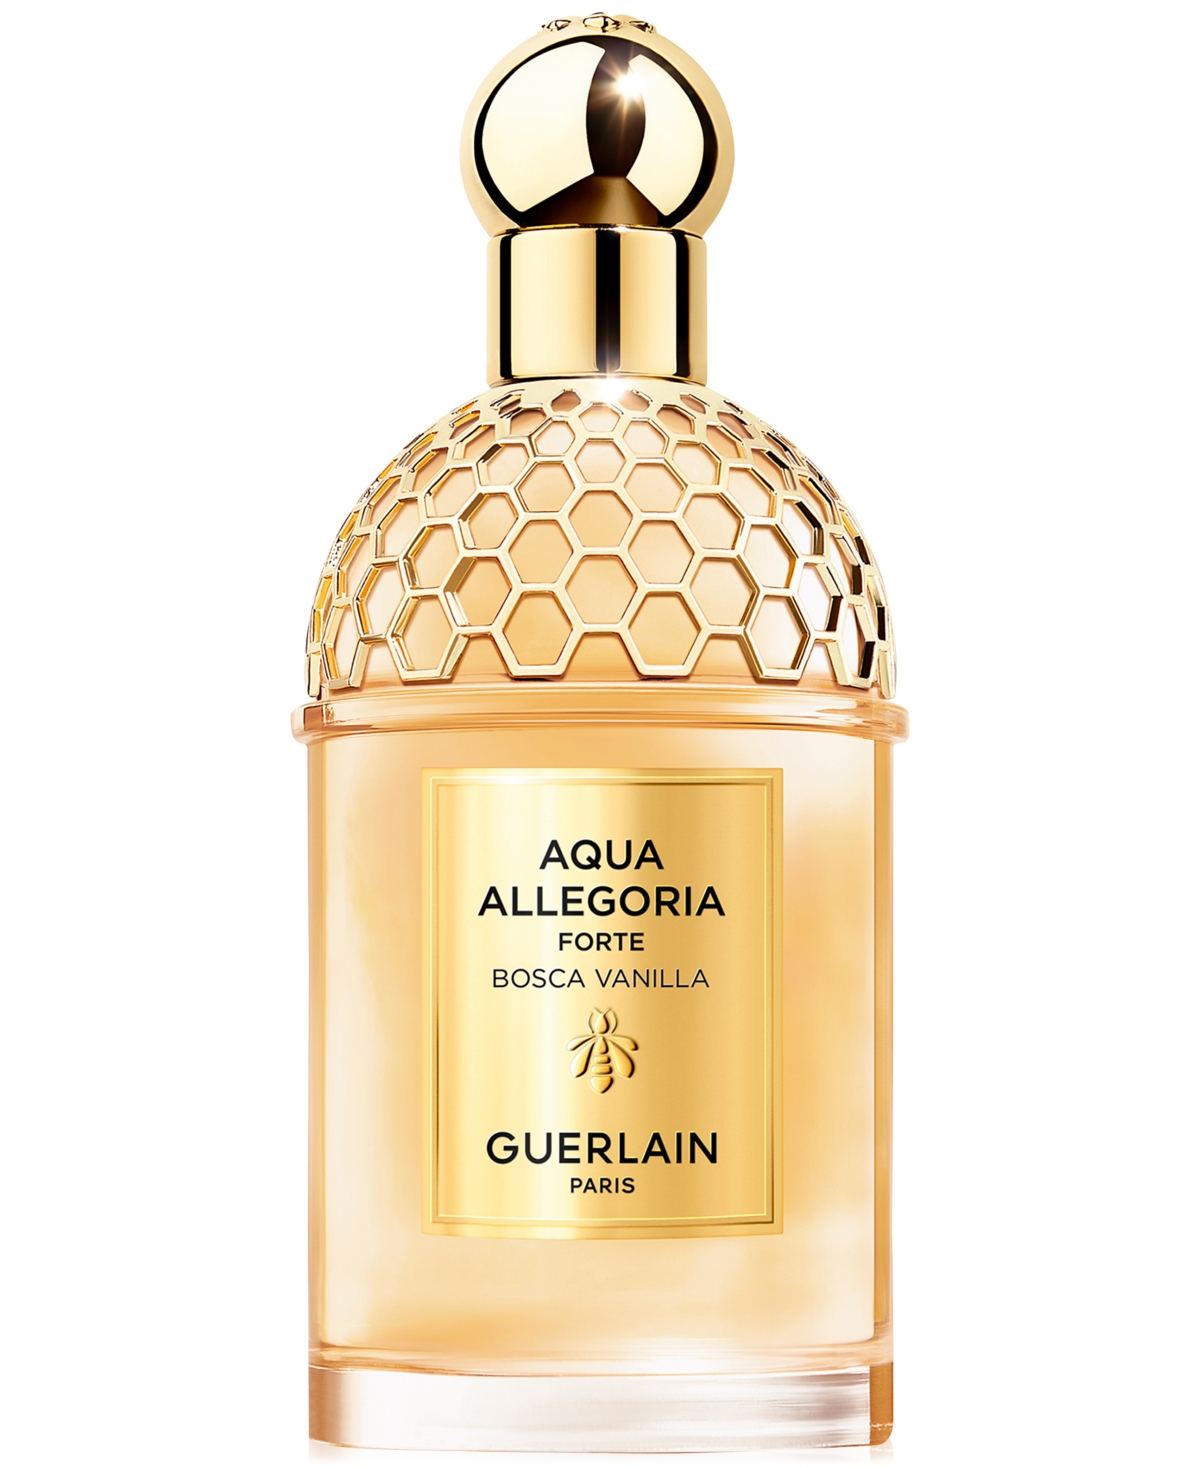 Guerlain Aqua Allegoria Forte Bosca Vanilla Eau De Parfum, 4.2 Oz.